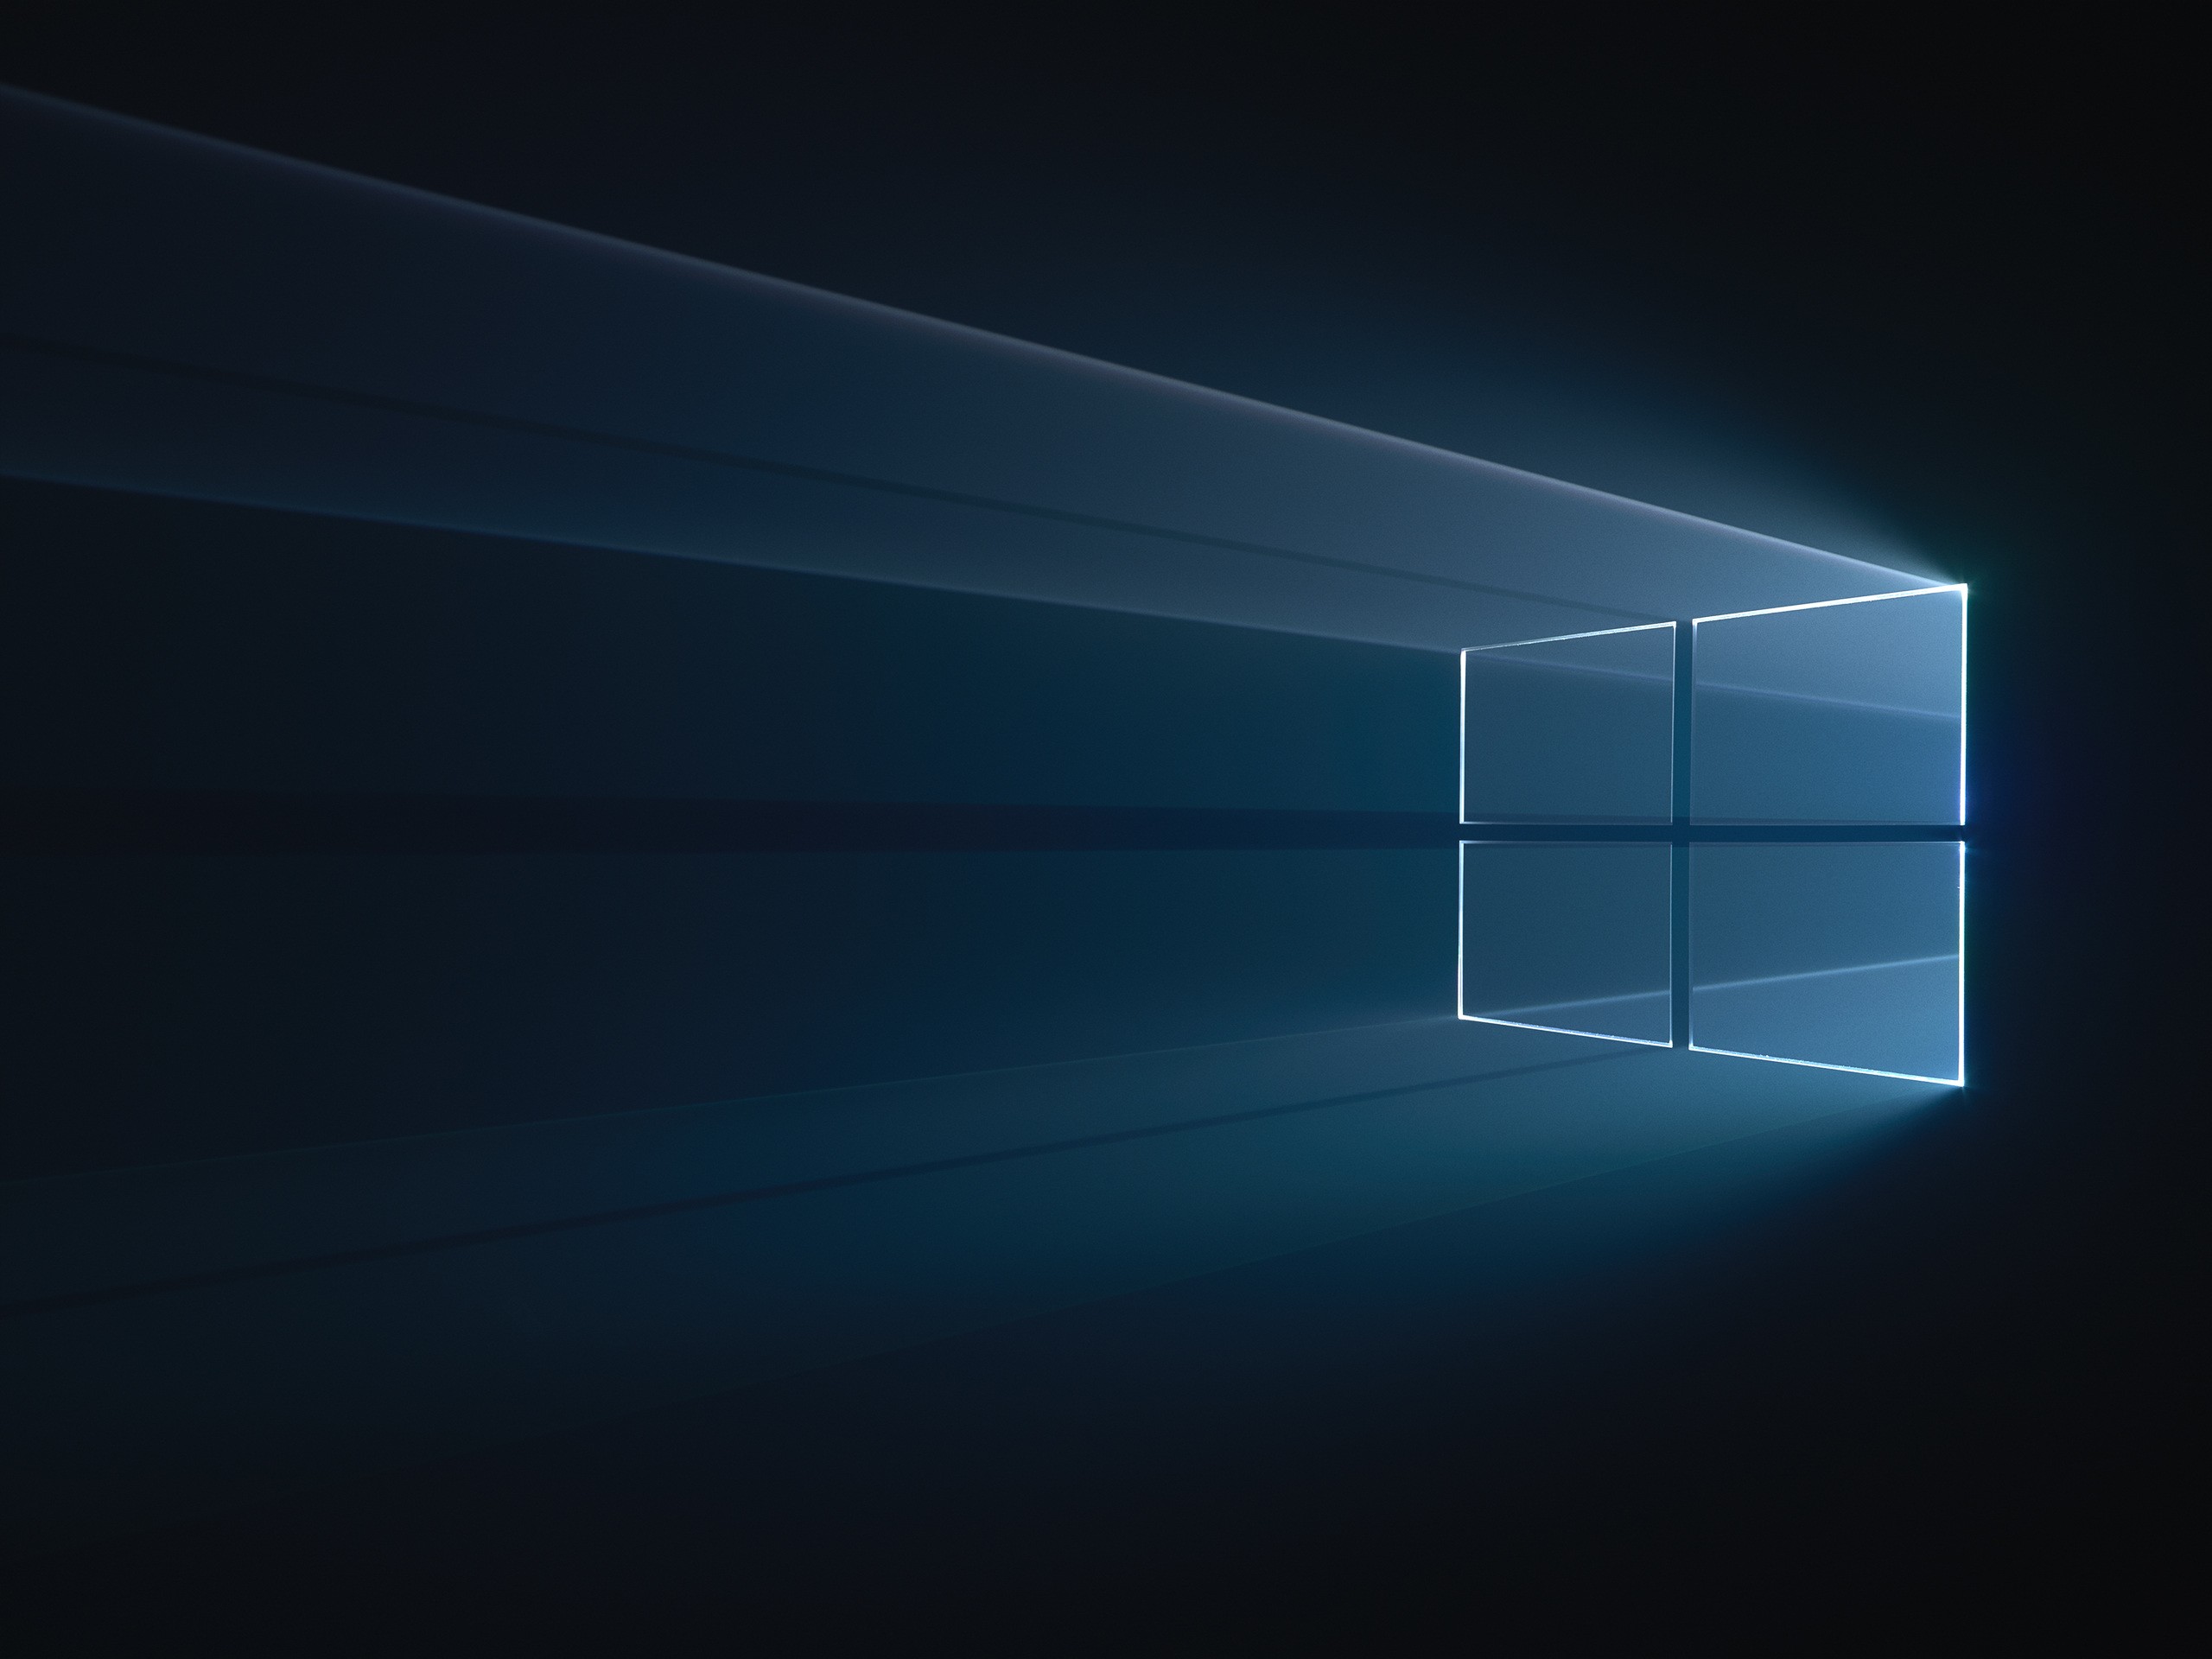 General 2560x1920 Windows 10 abstract GMUNK night mode Microsoft Windows logo simple background digital art